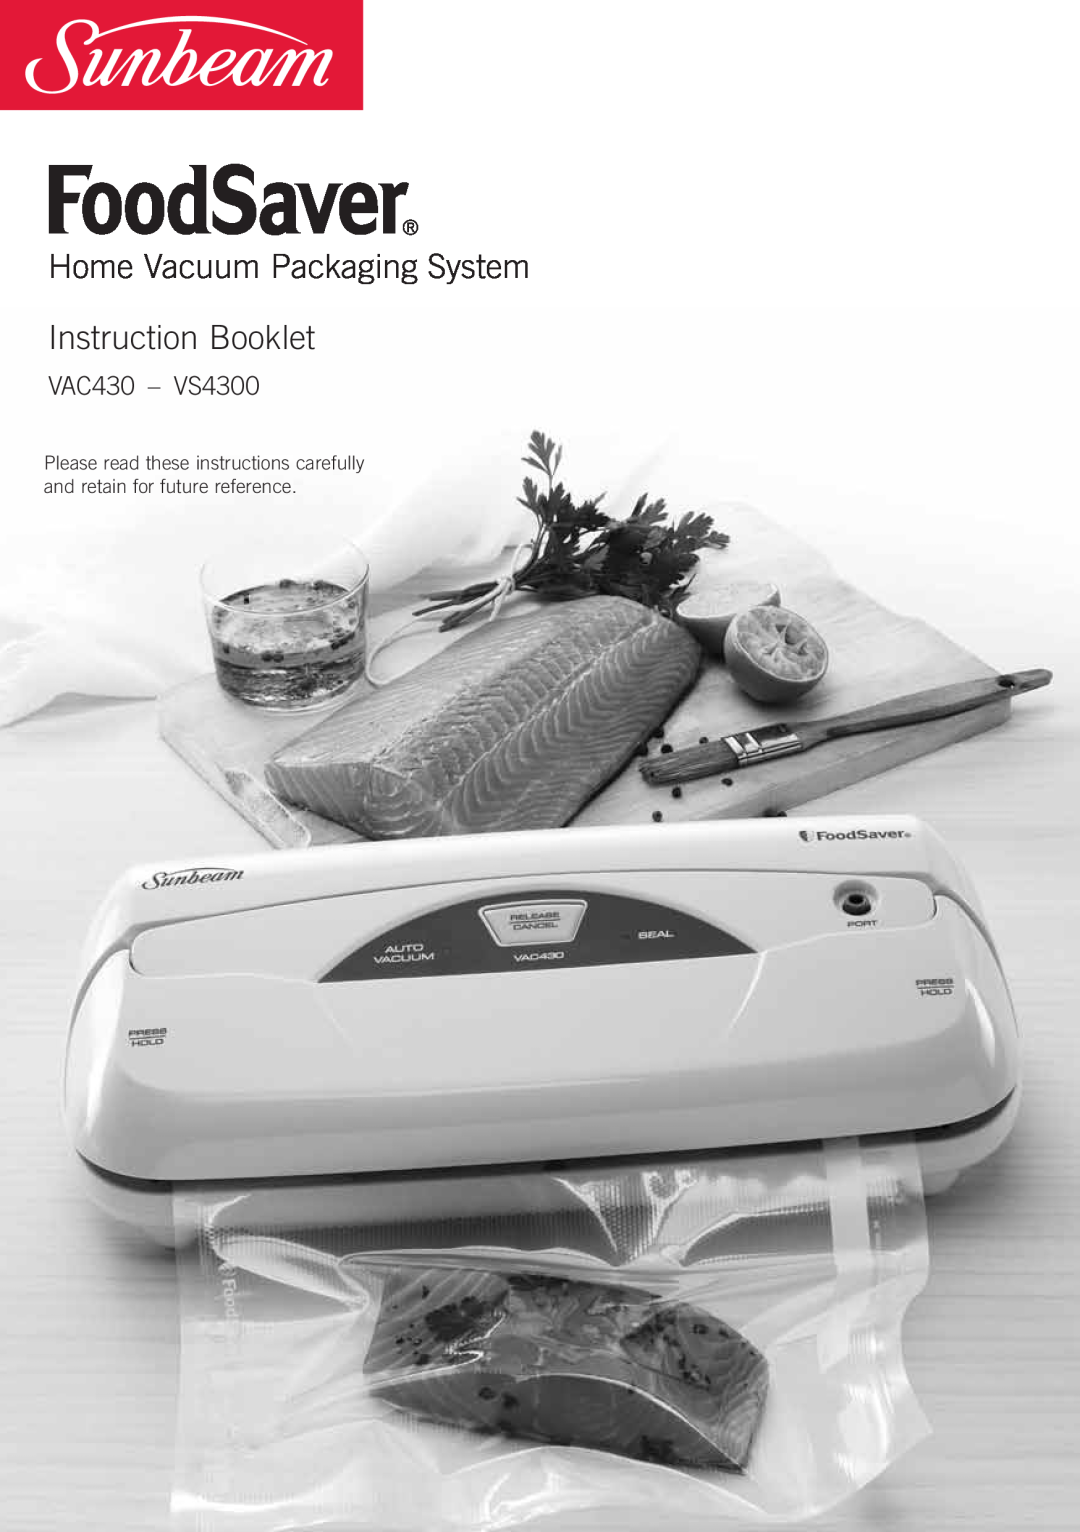 Sunbeam manual Home Vacuum Packaging System Instruction Booklet, VAC430 - VS4300 